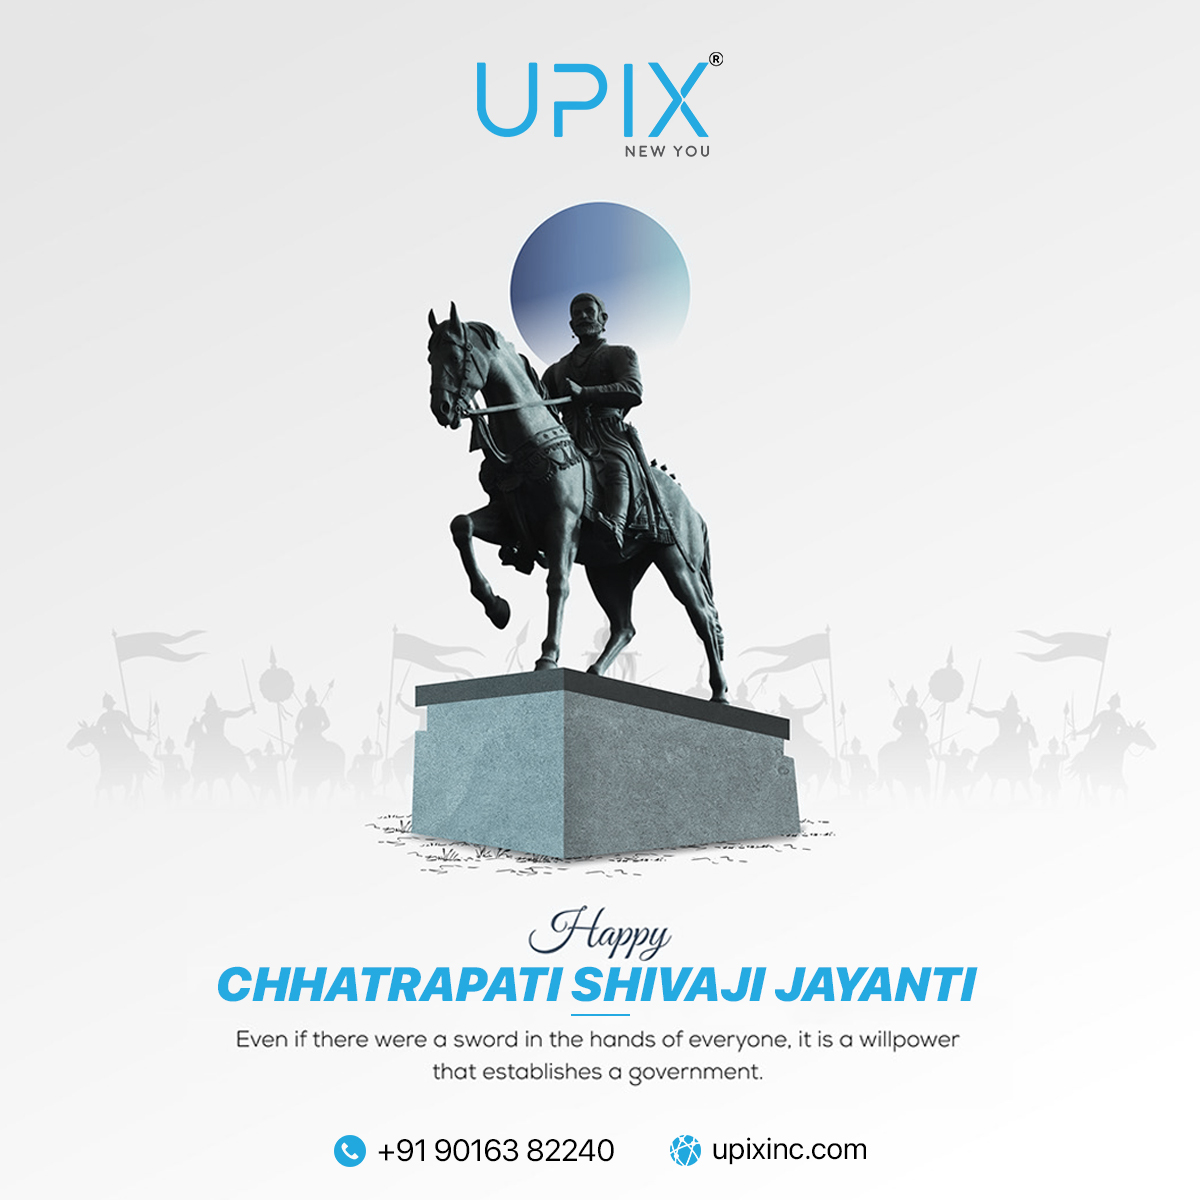 Let us honor the great warrior king Shivaji Maharaj on his Jayanti. Jai Bhavani, Jai Shivaji!
.
#upixinc #chatrapatishivaji #shivajimaharaj #ShivajiJayanti #shivaji #CableUpgrade #ElectricalSafety #connectivity #DeviceCompatibility #visuals #EnhancedExperience #electricalservices